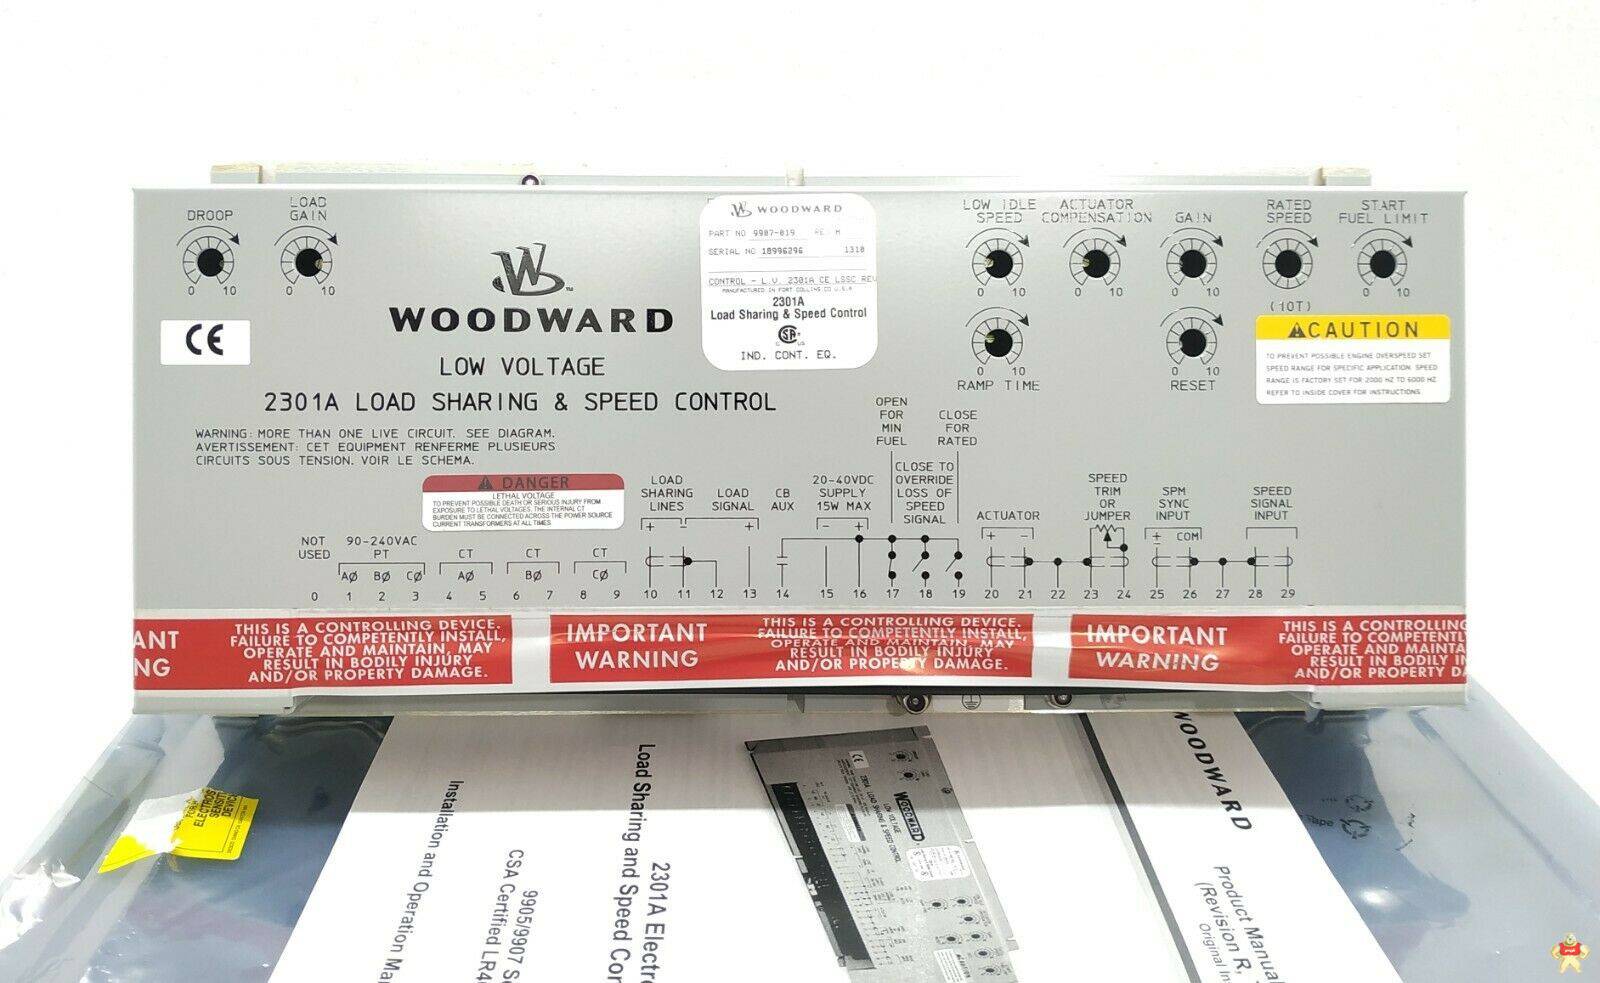 WOODWARD 8440-1809伍德沃德船舶备件供应 全新原装,库存现货,质保一年